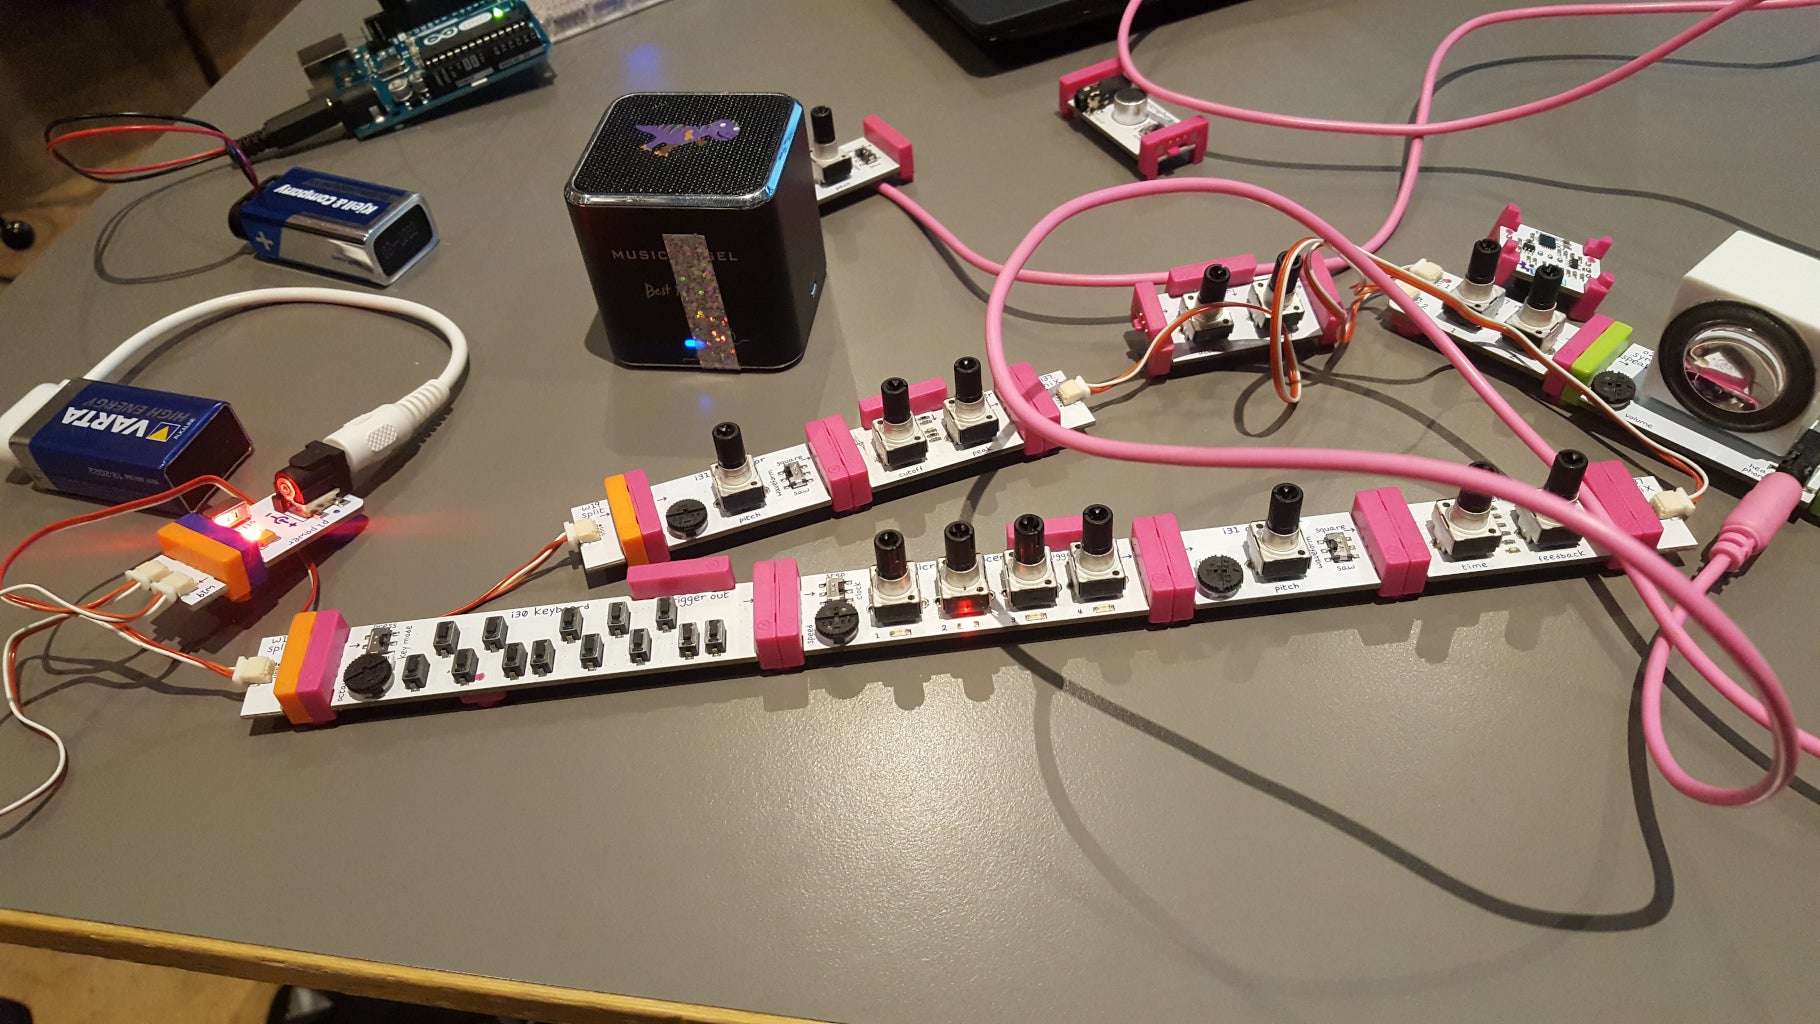 littleBits